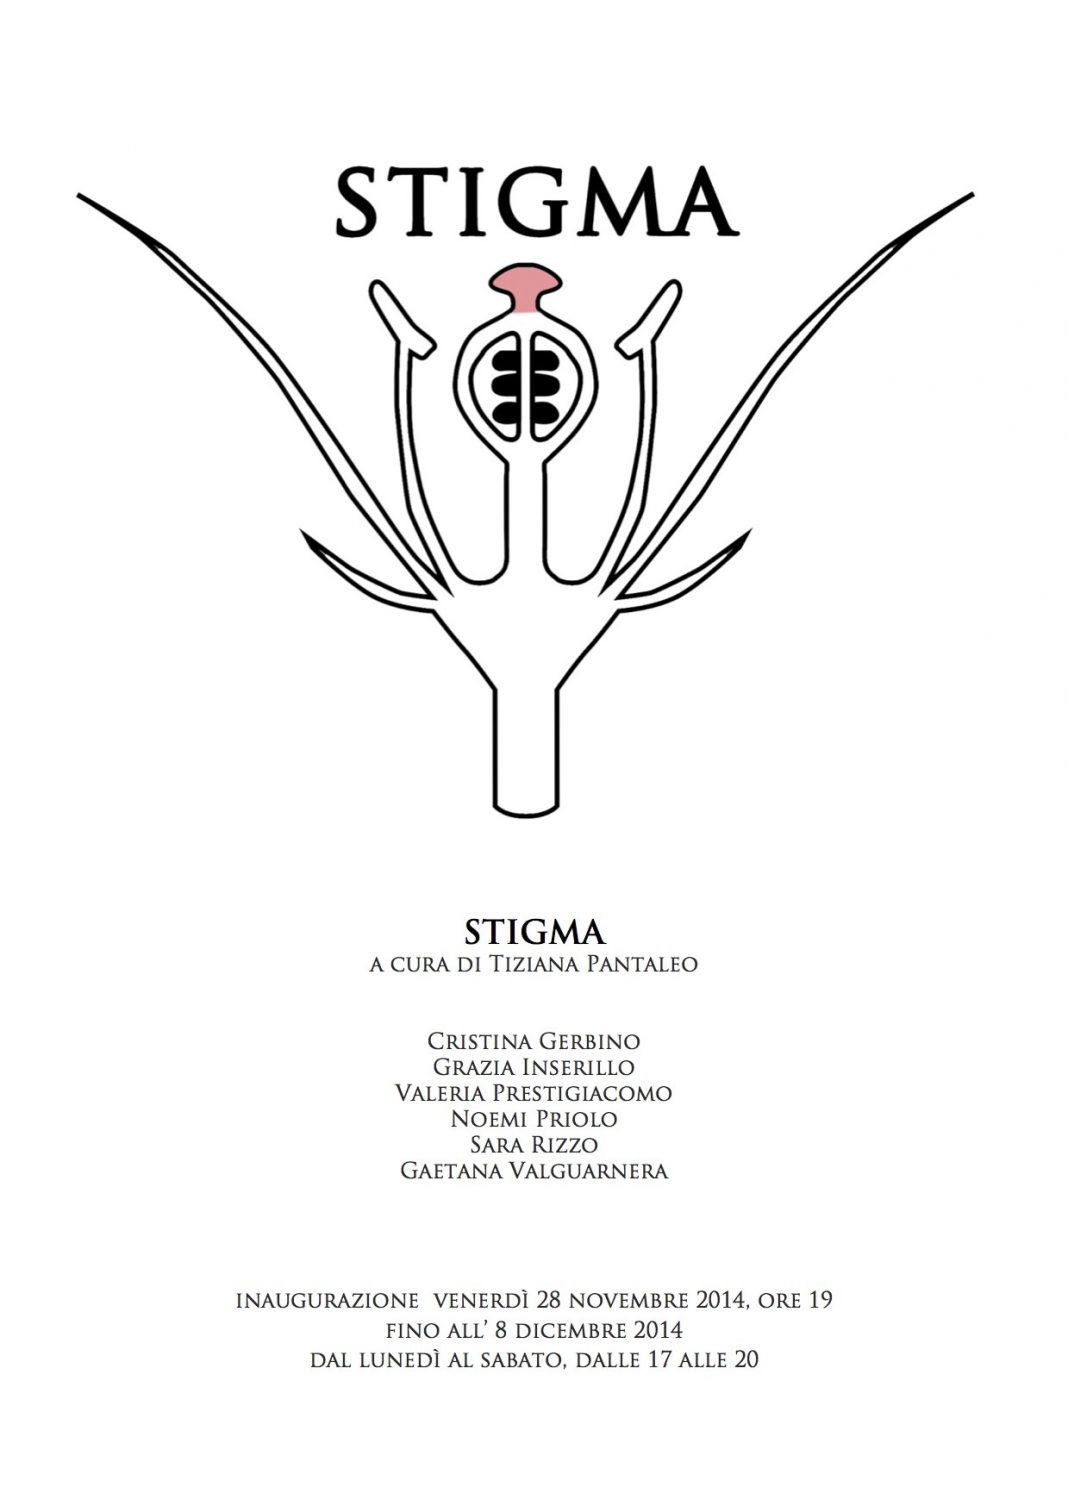 Stigmahttps://www.exibart.com/repository/media/eventi/2014/11/stigma-1068x1512.jpg